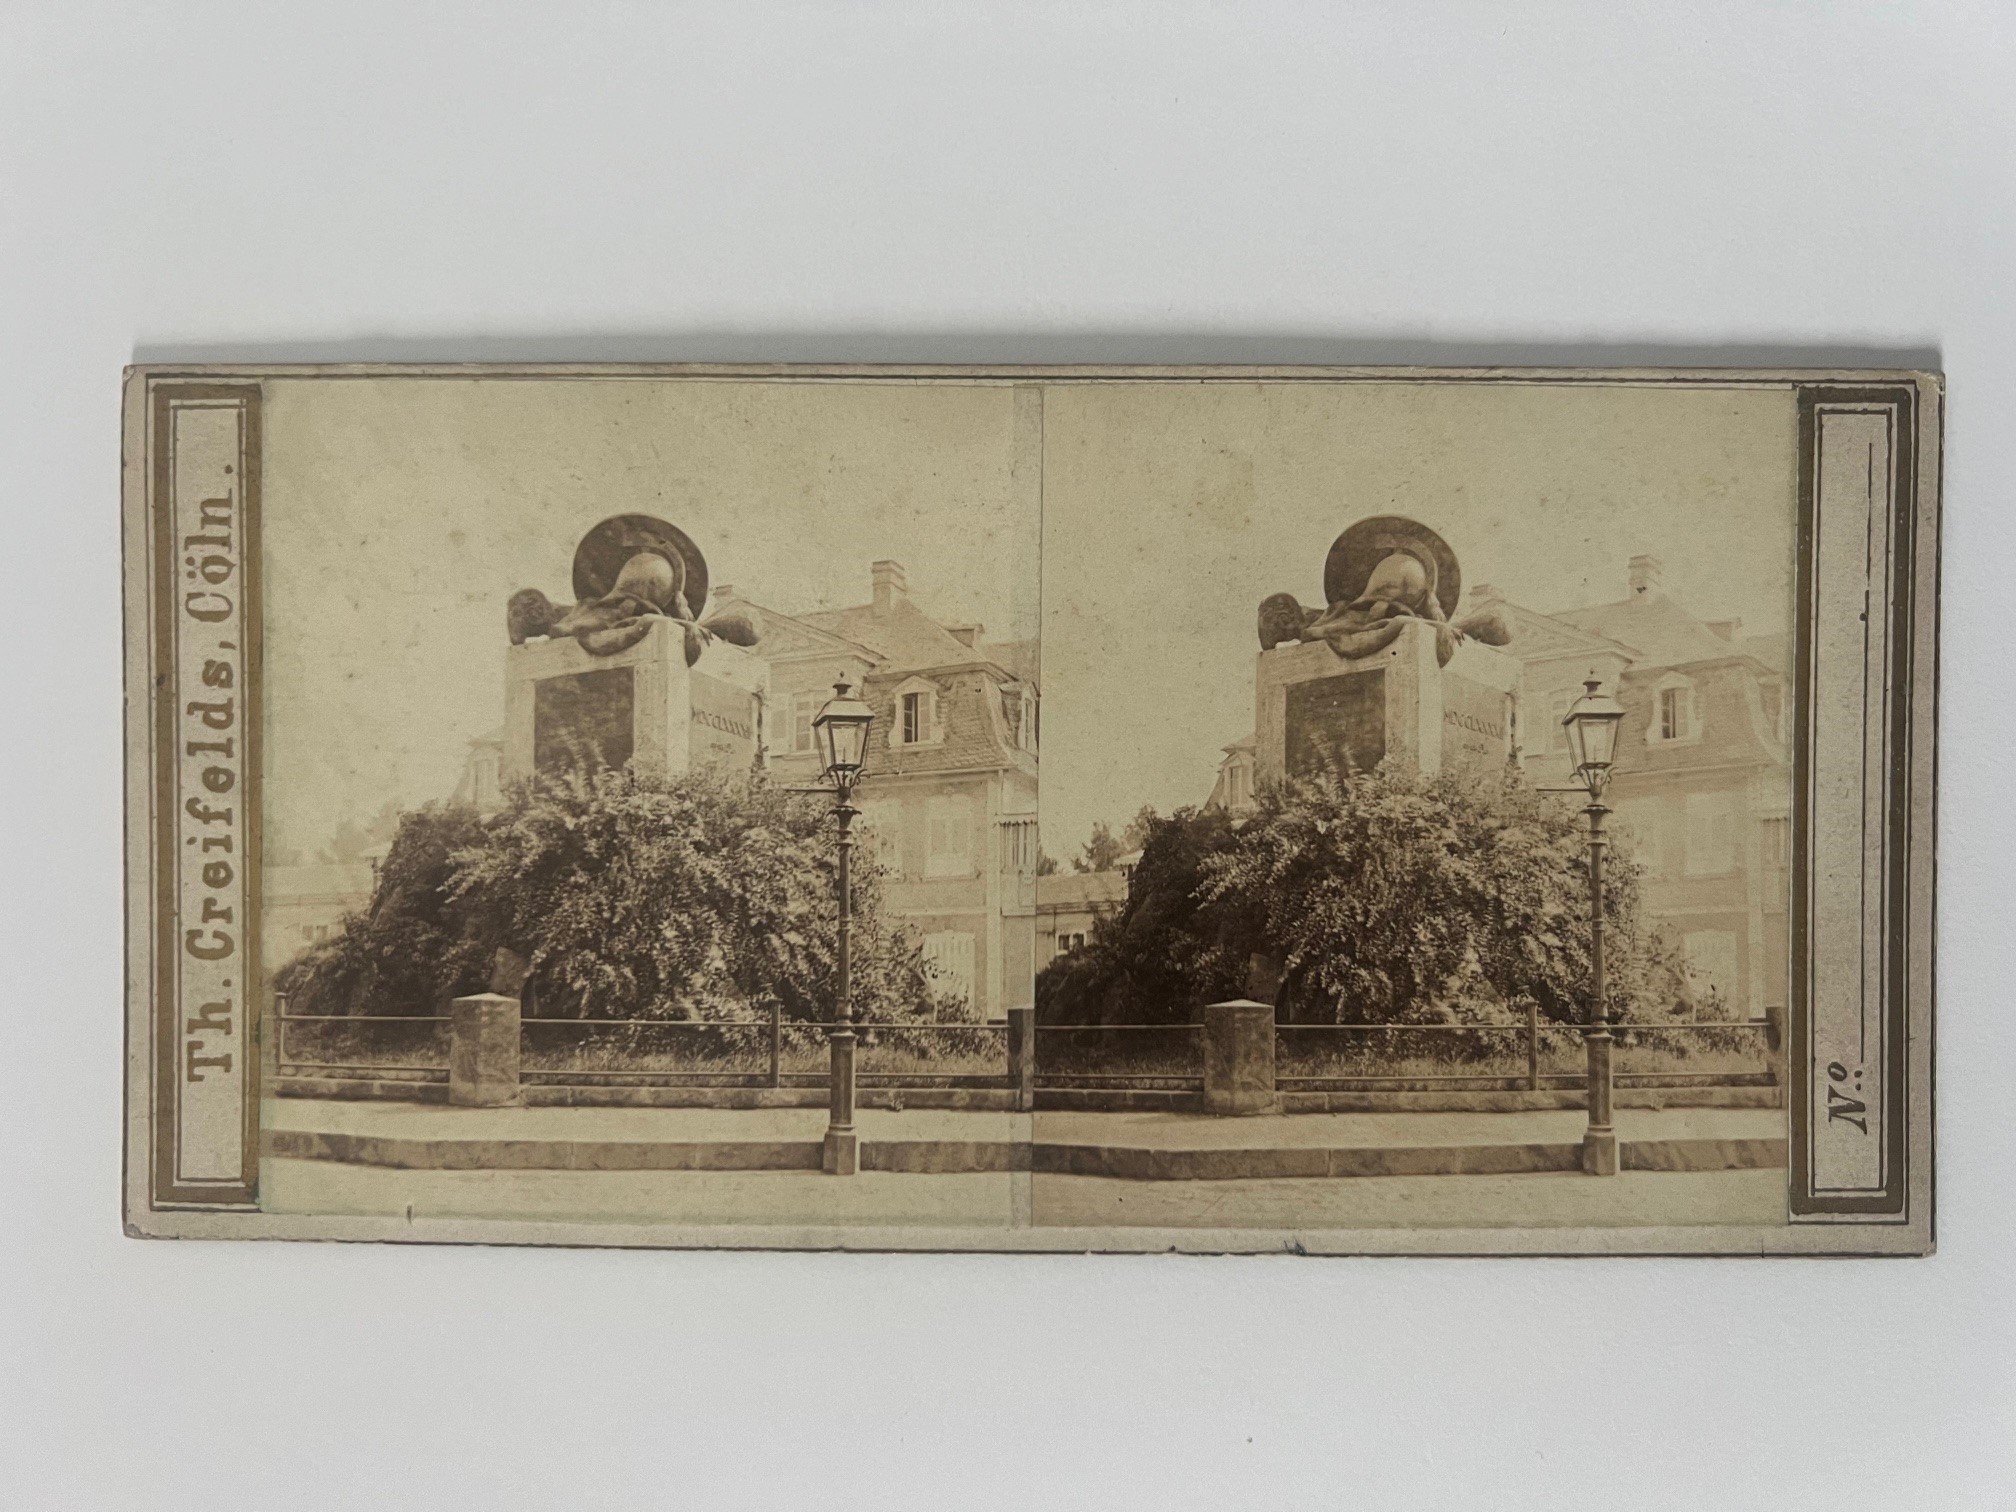 Stereobild, Theodor Creifelds, Frankfurt, Nr. 286, Hessenmonument, ca. 1870. (Taunus-Rhein-Main - Regionalgeschichtliche Sammlung Dr. Stefan Naas CC BY-NC-SA)